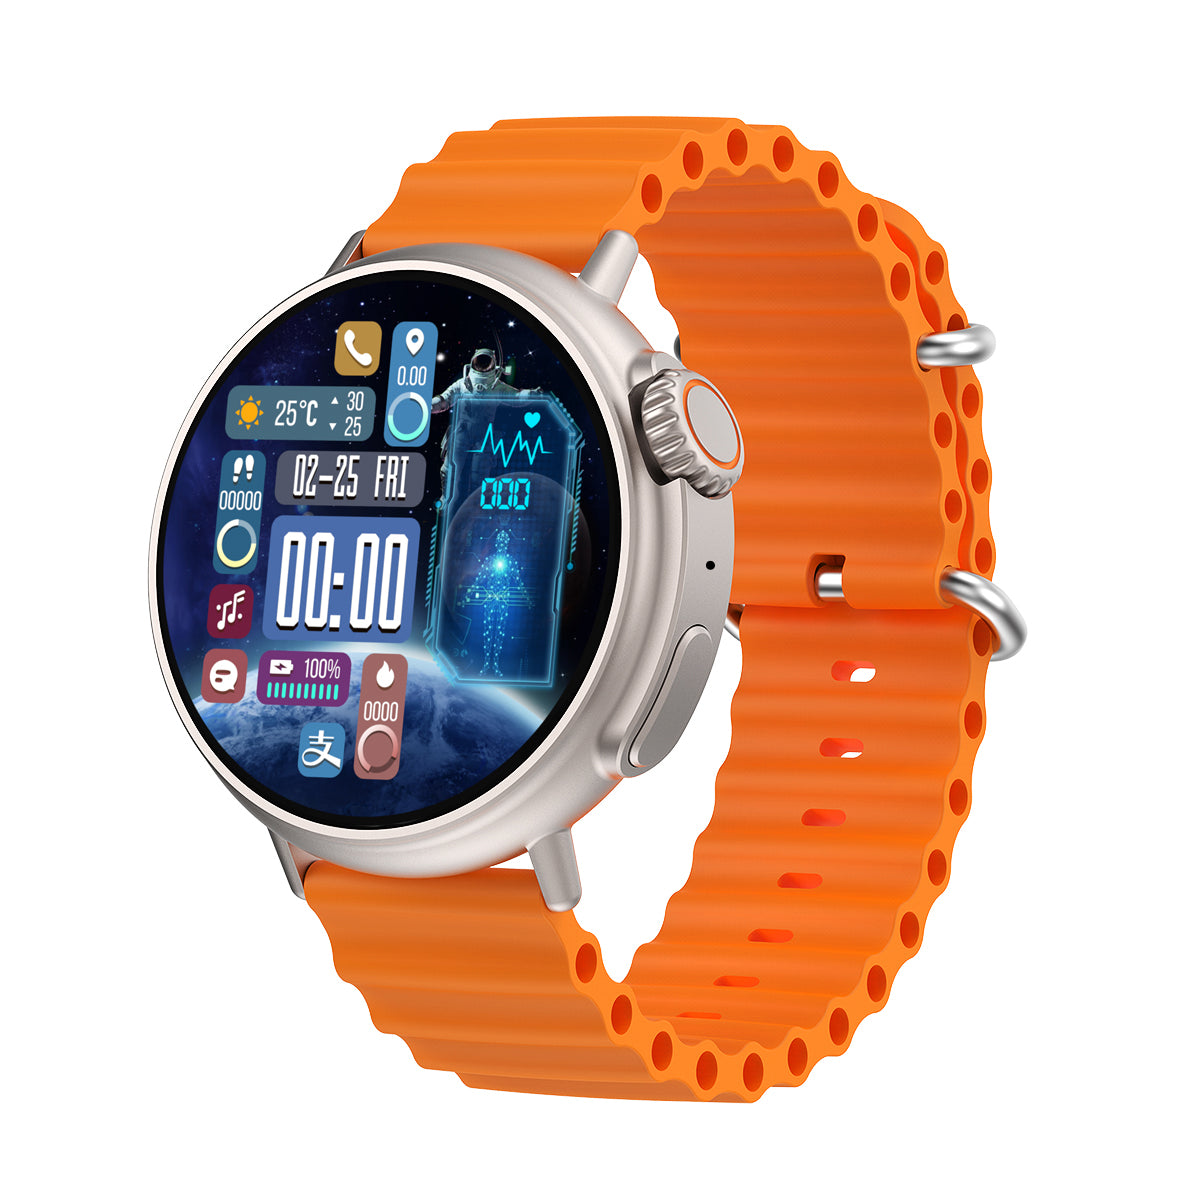 samsung galaxy gear smartwatch orange